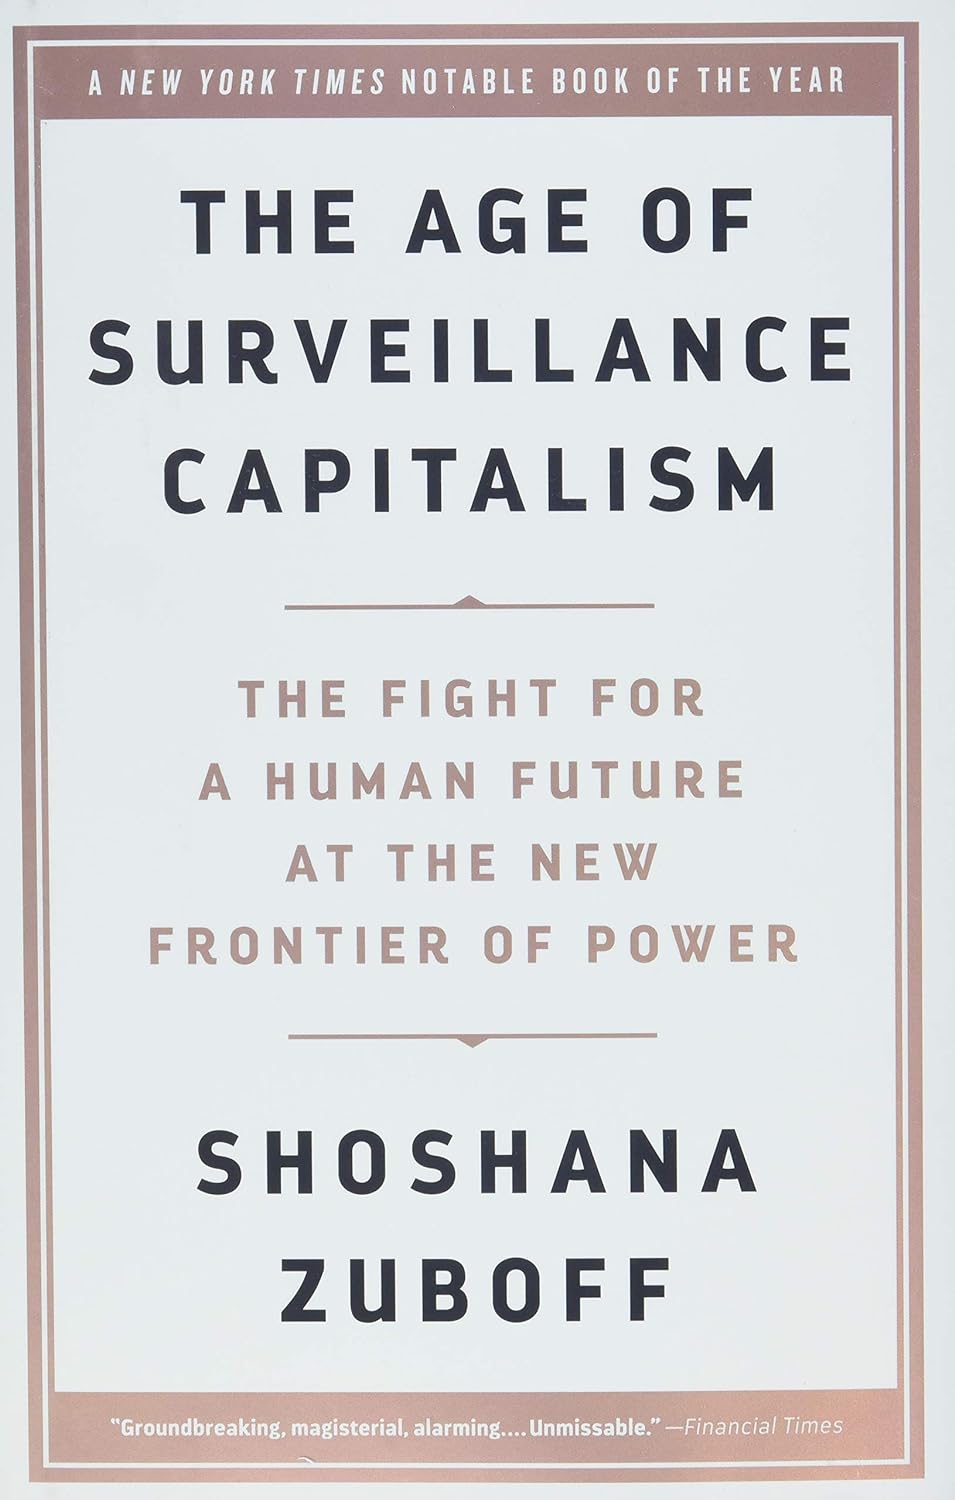 Shoshana Zuboff: The Age of Surveillance Capitalism (2019, Public Affairs)